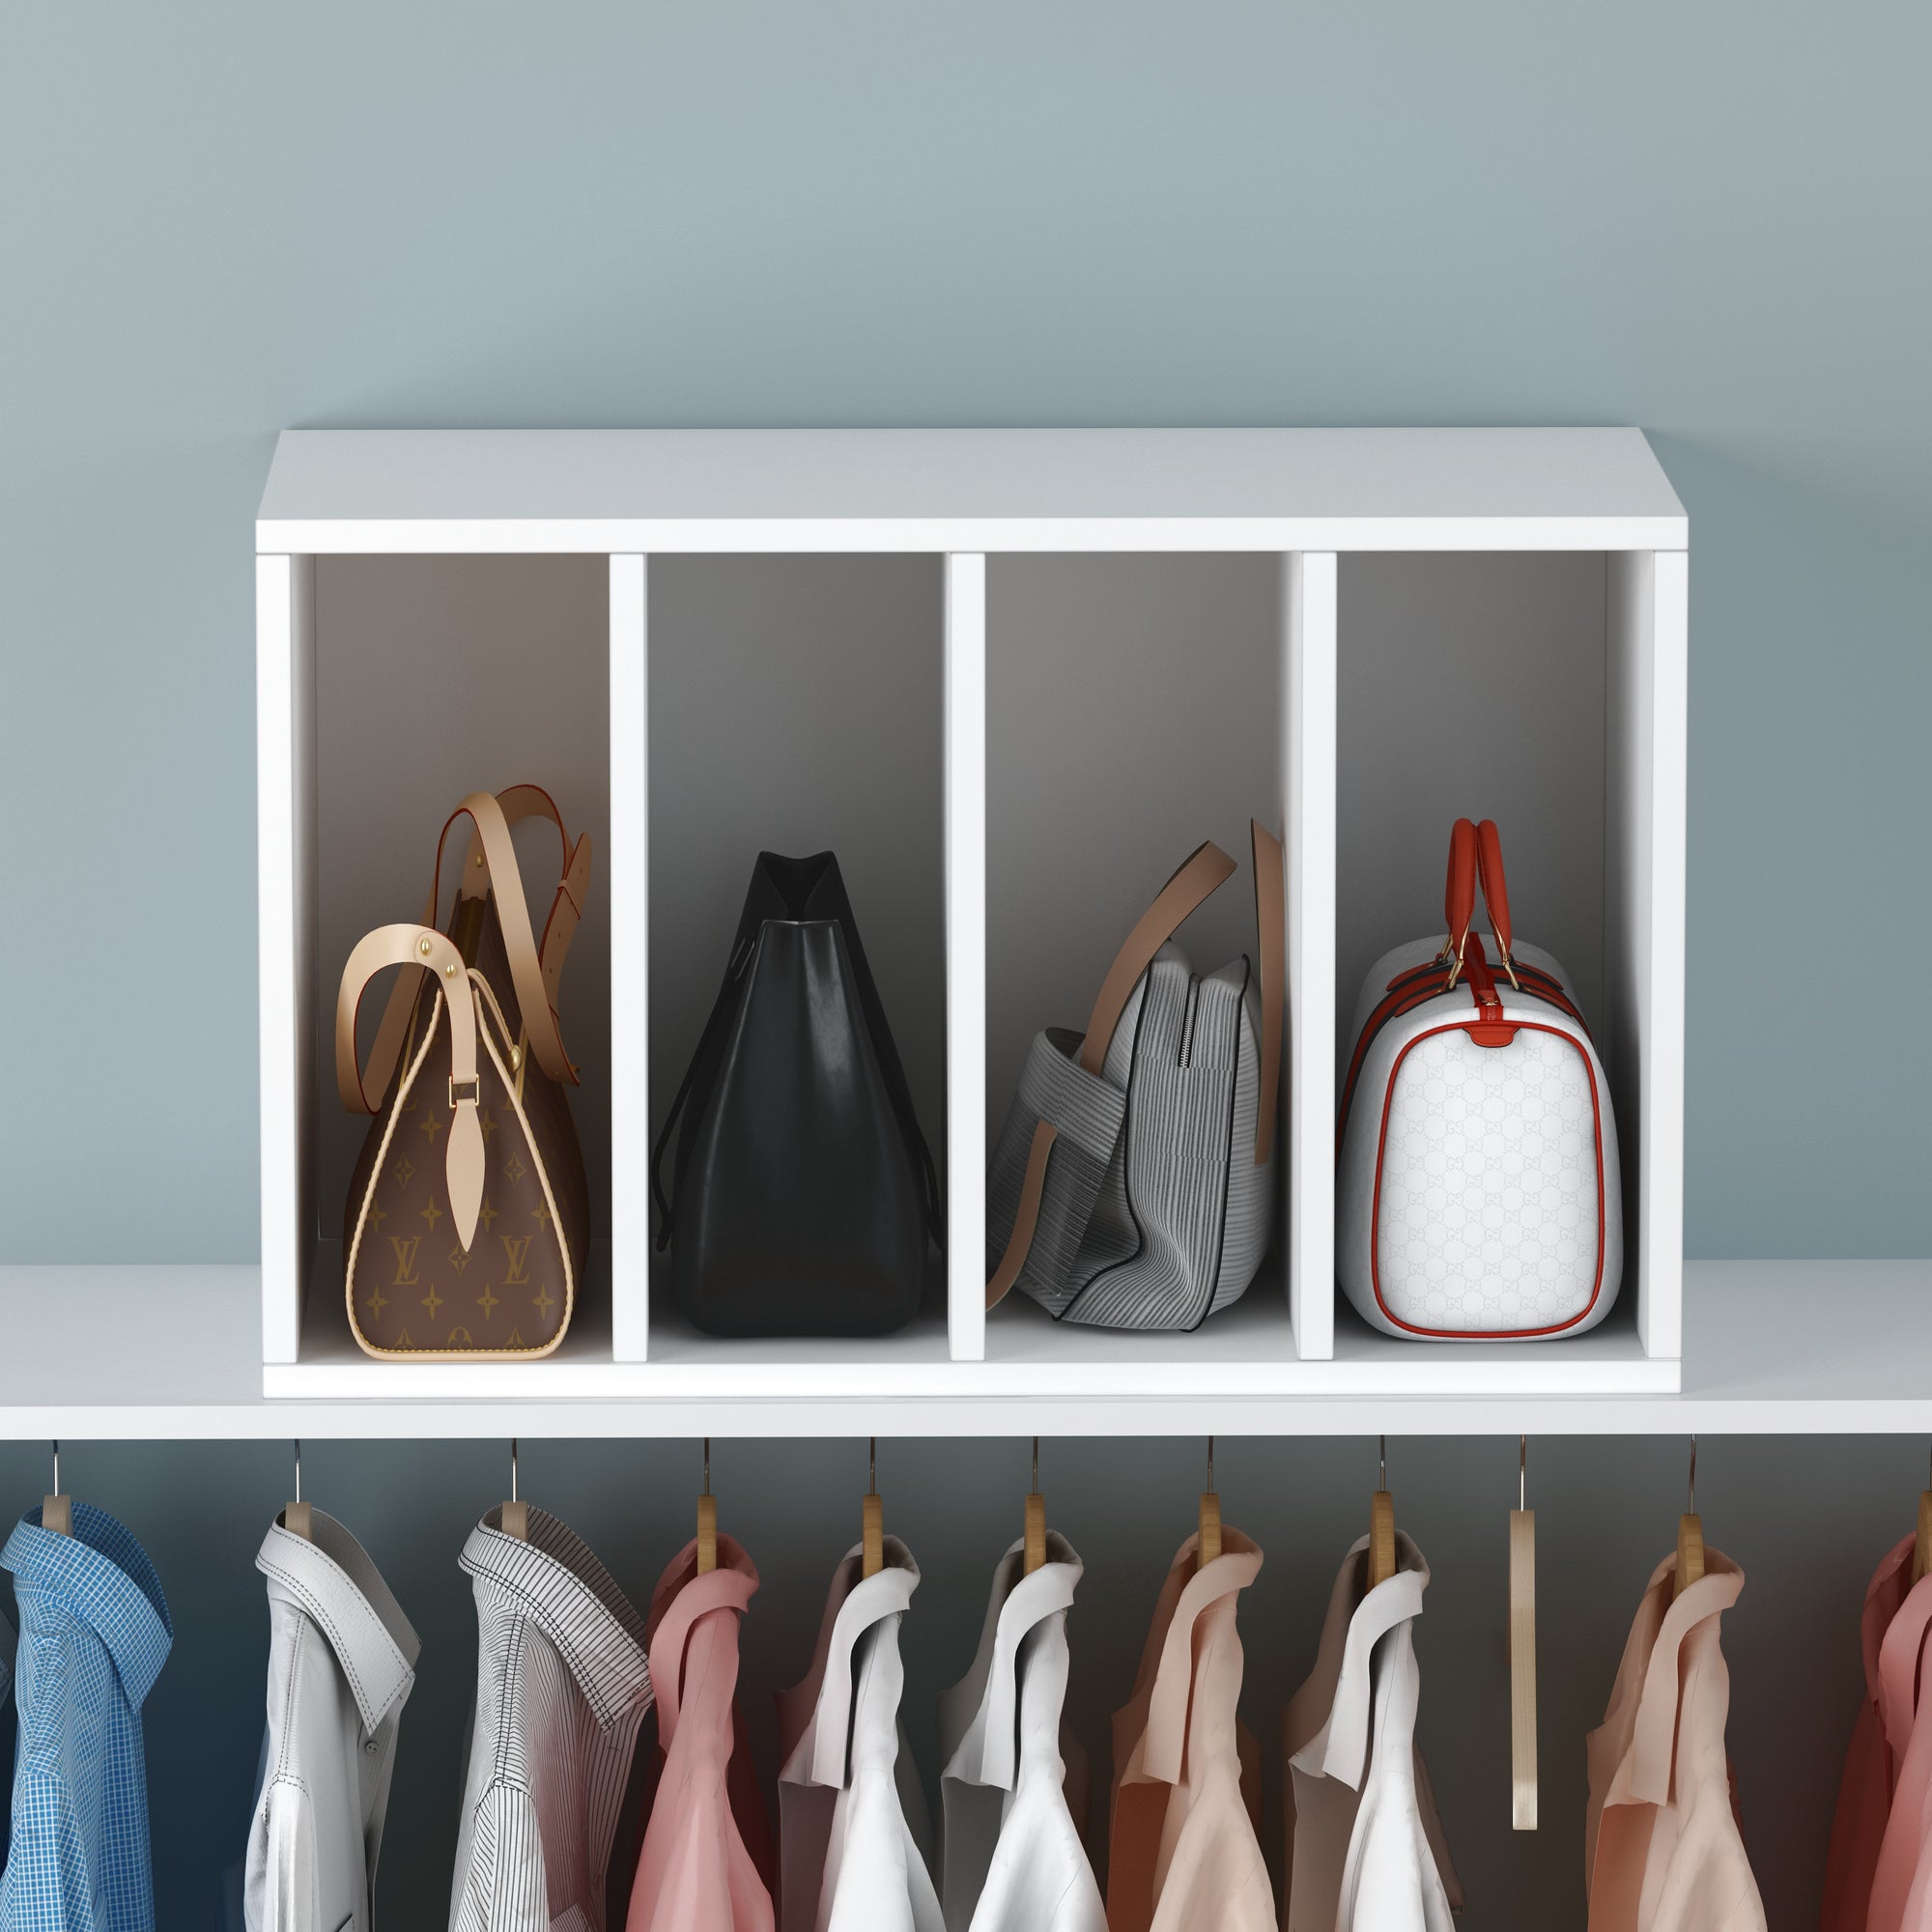 How to Store Purses - 15 Easy Handbag Storage Ideas & Tips